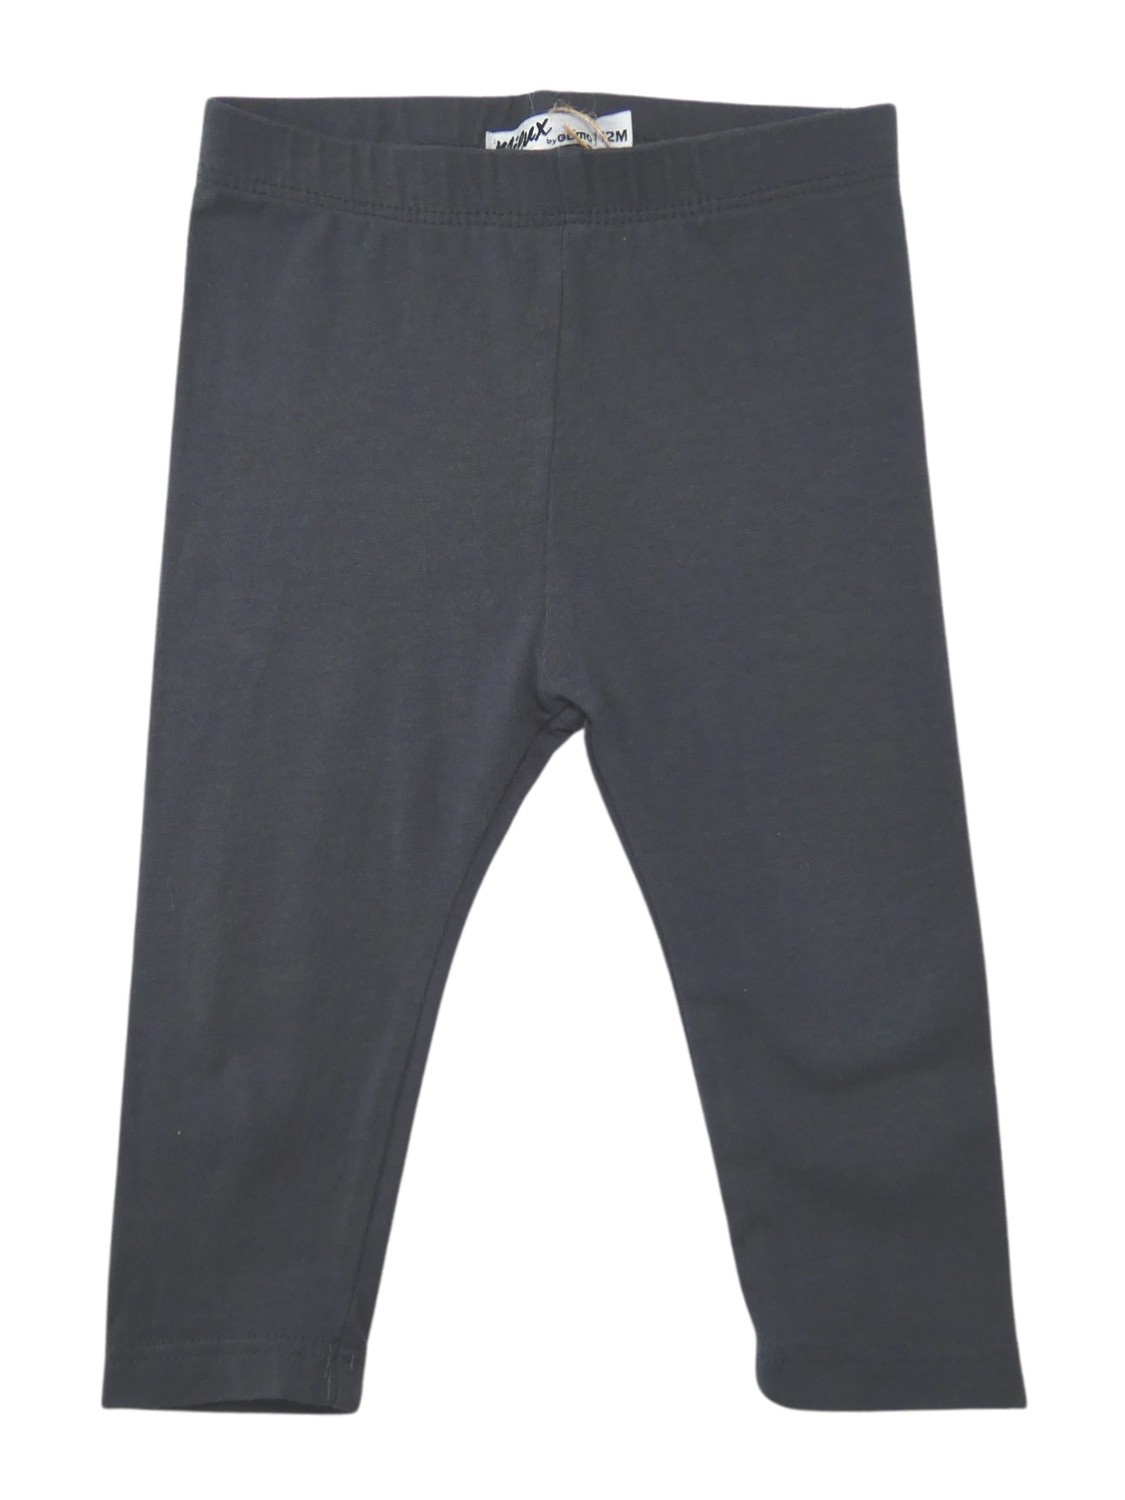 Pantalon leggings gris GEMO taille 12 mois